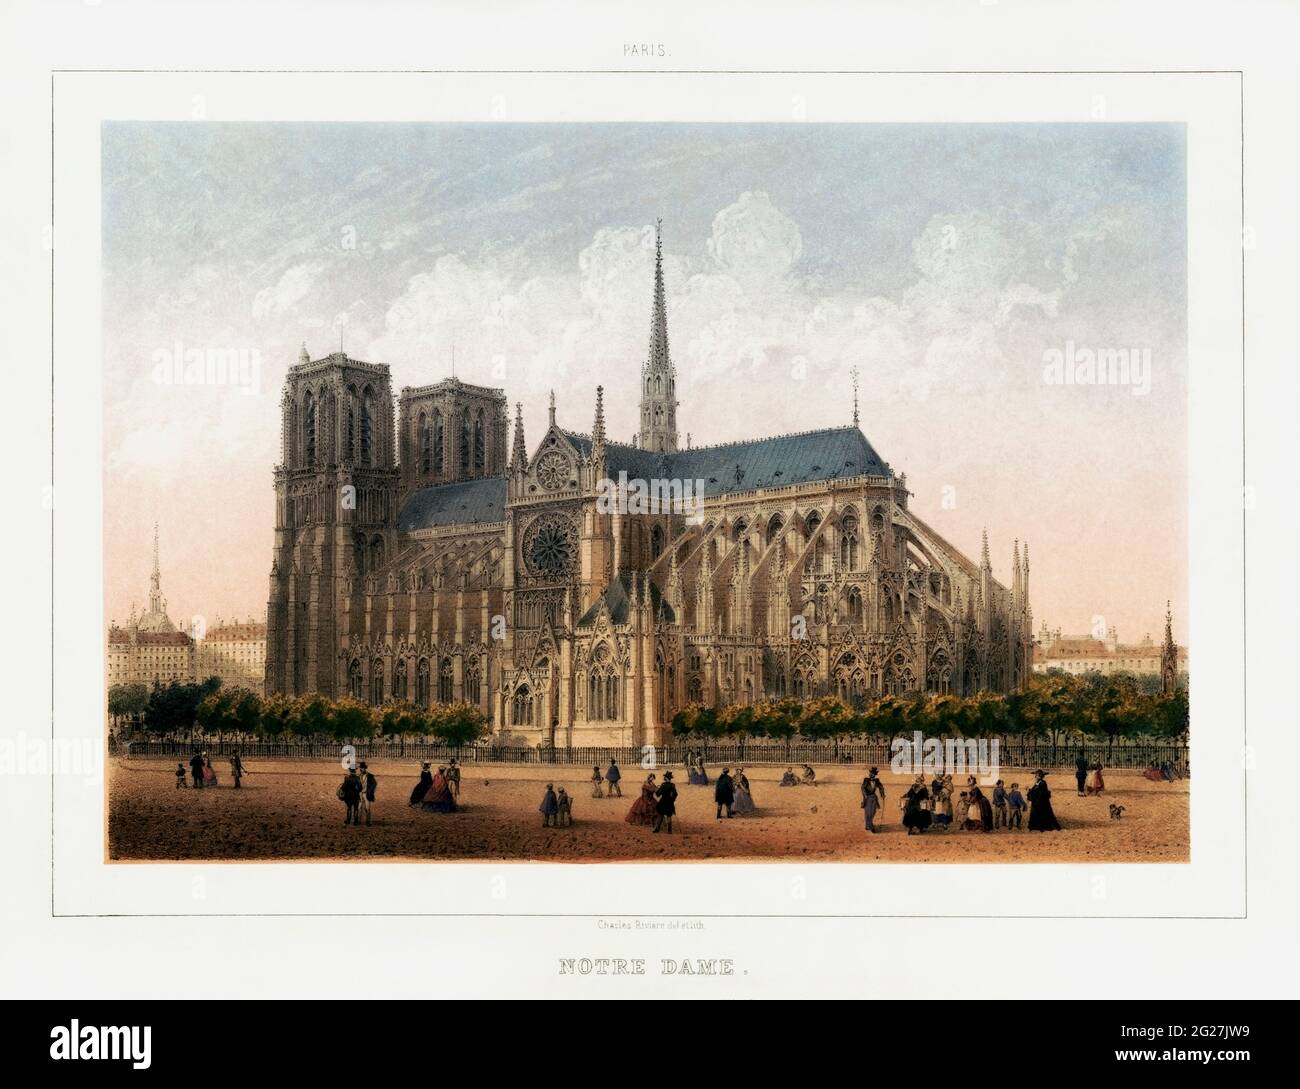 Stampa del 19 ° secolo di Notre Dame de Paris, una cattedrale cattolica di età medievale a Parigi, Francia. Foto Stock